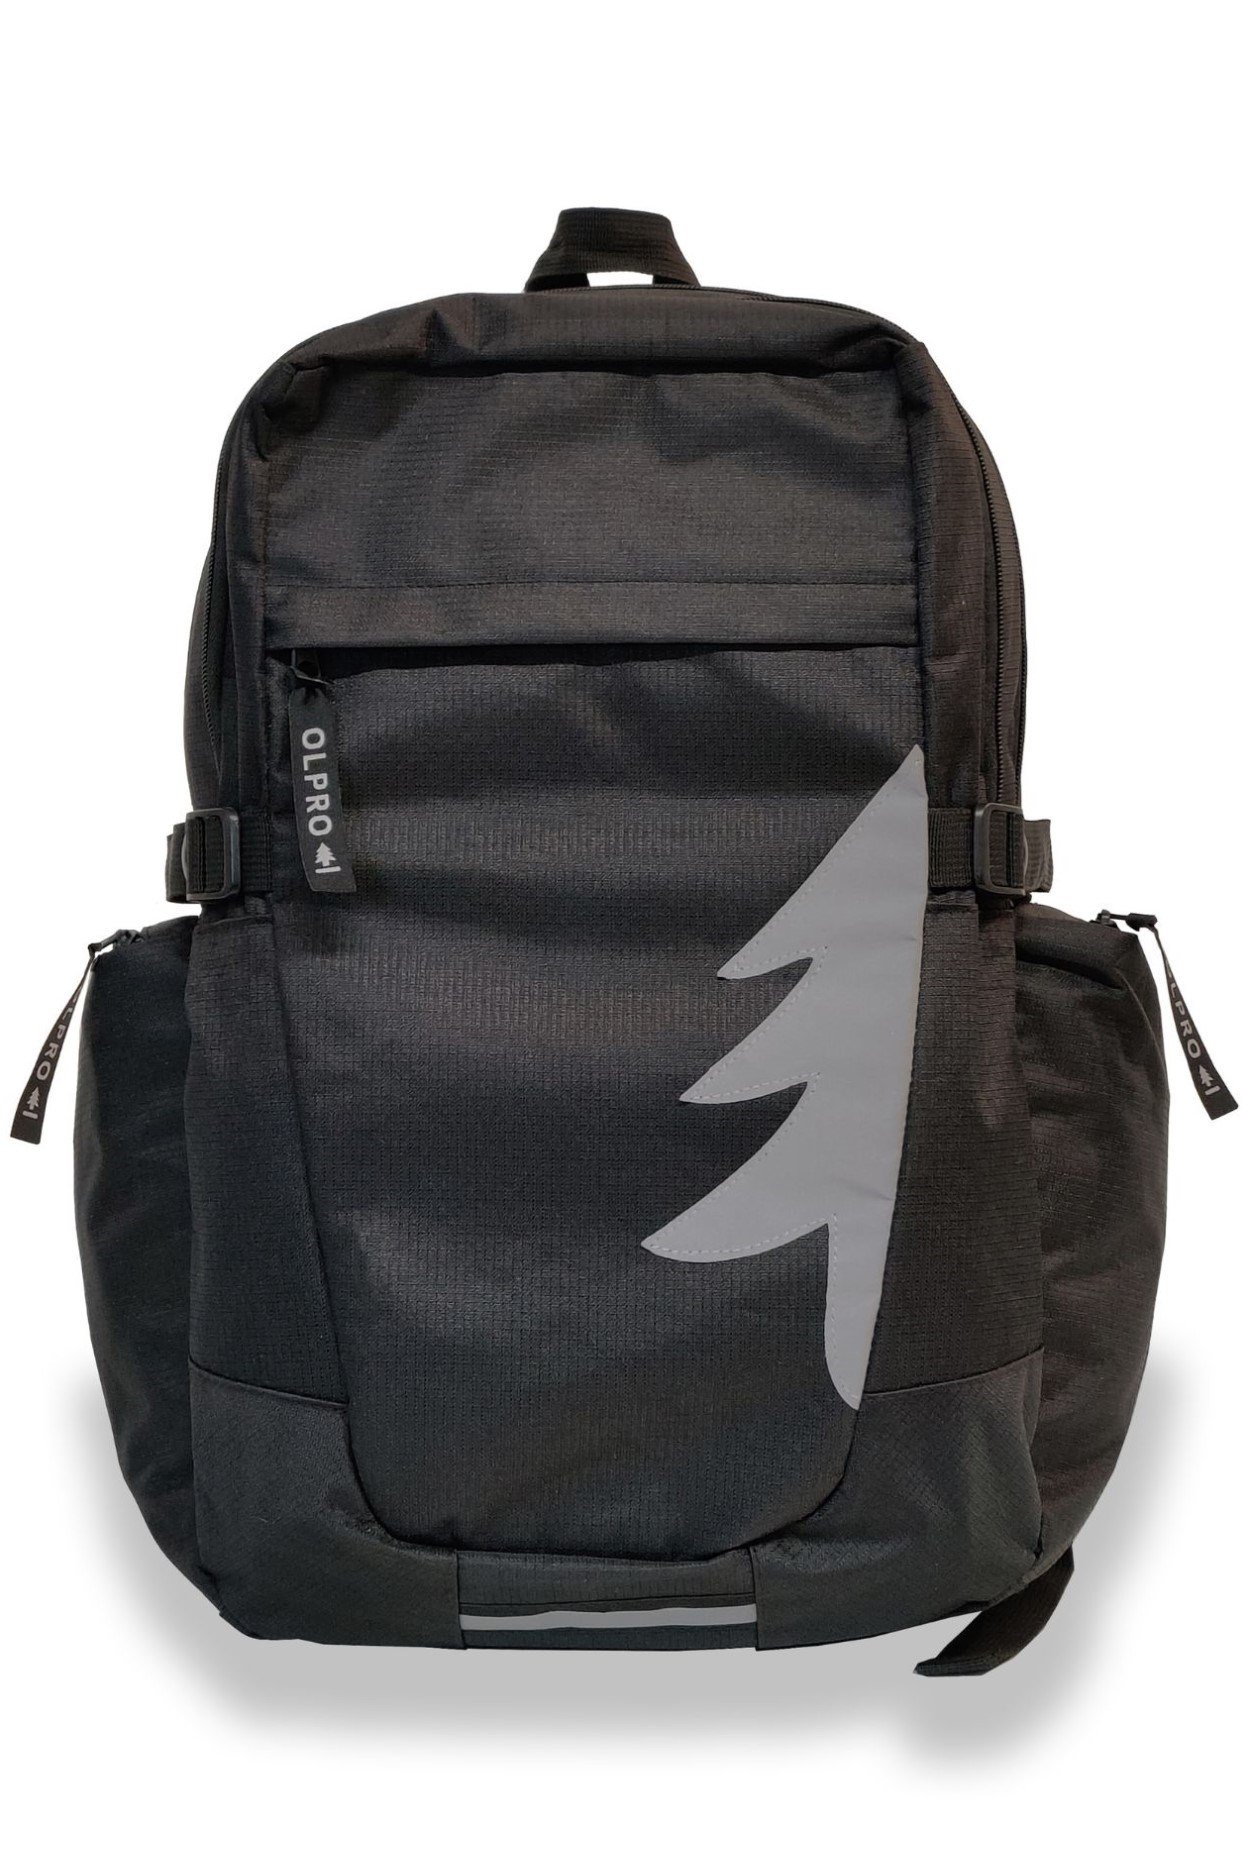 32L Daysac Backpack -